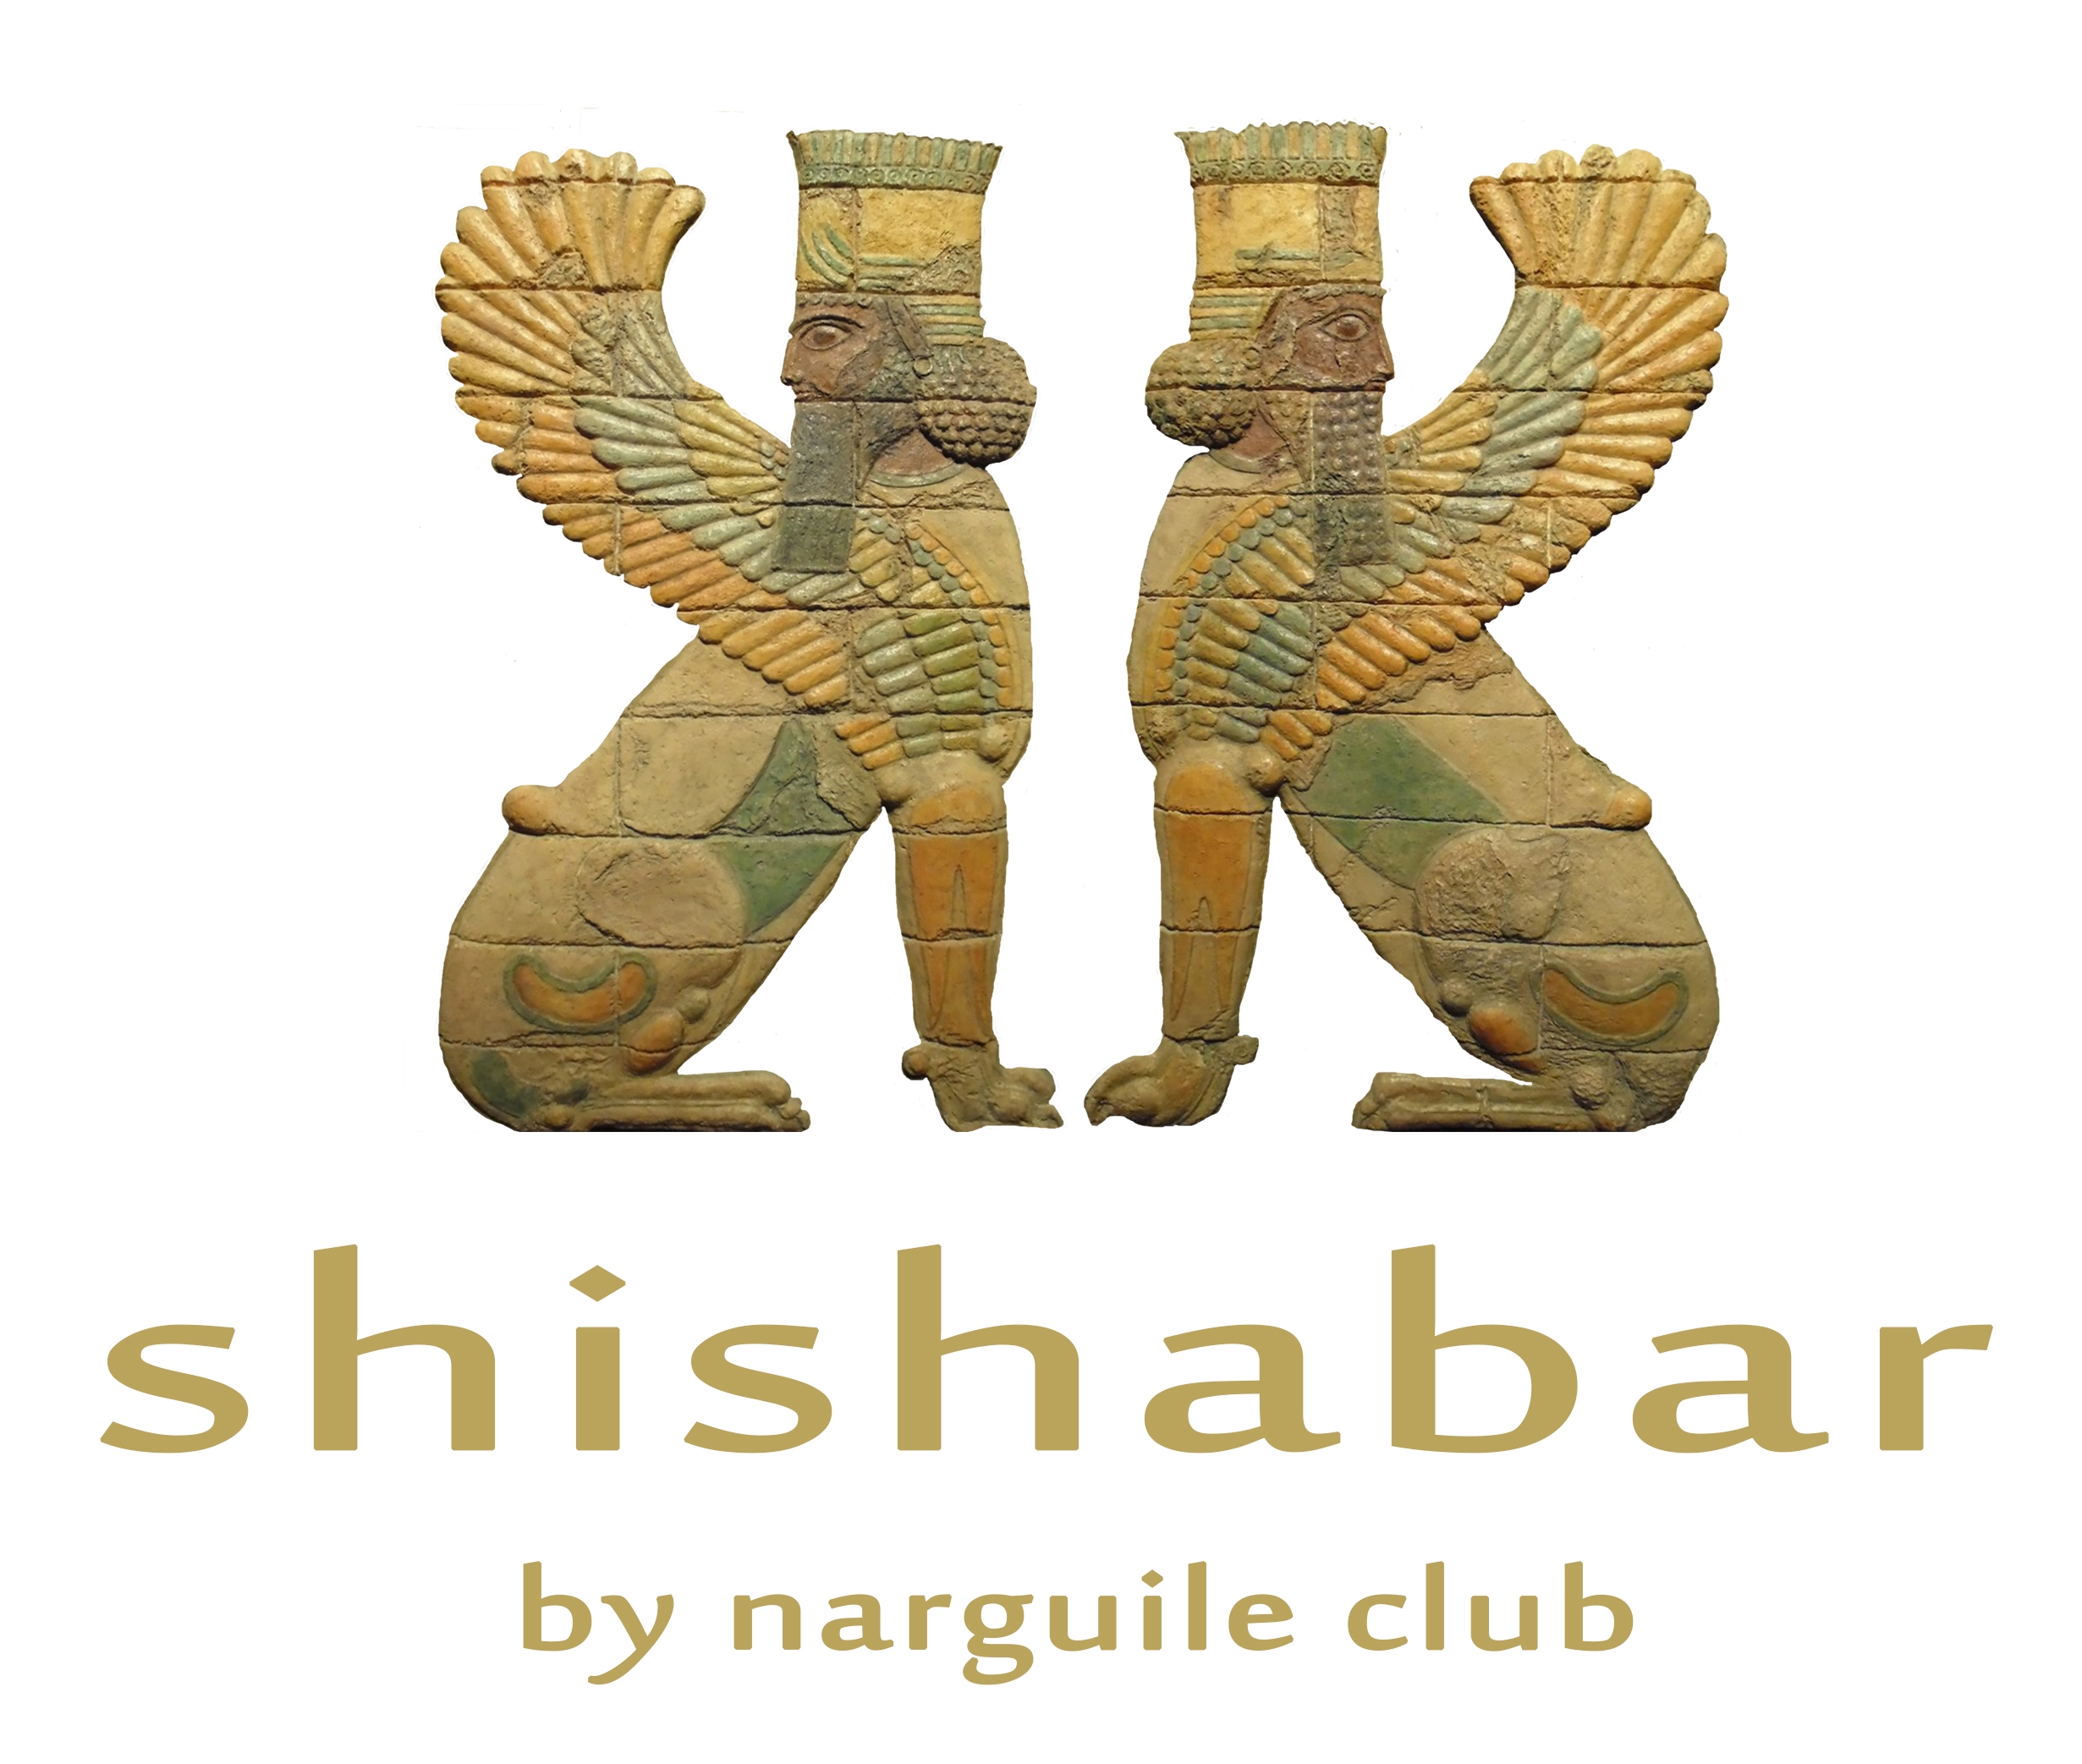 .-ShishaBar-. by Narguile Club